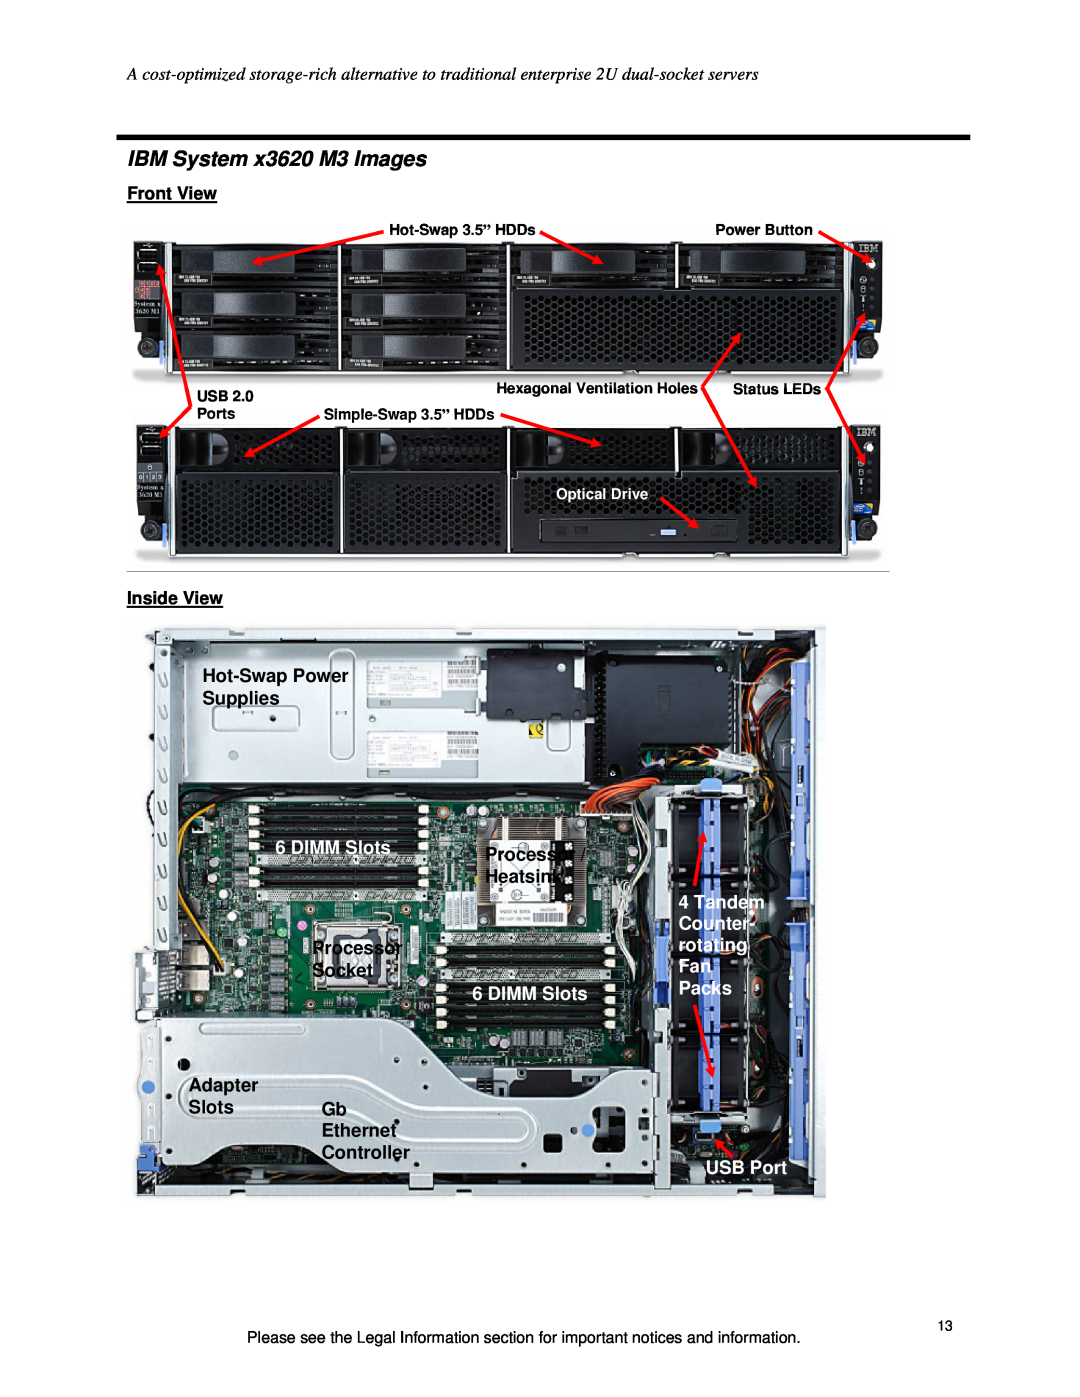 IBM X3620 M3 IBM System x3620 M3 Images, Hot-SwapPower Supplies, DIMM Slots, Processor, Heatsink, Counter, rotating, Packs 